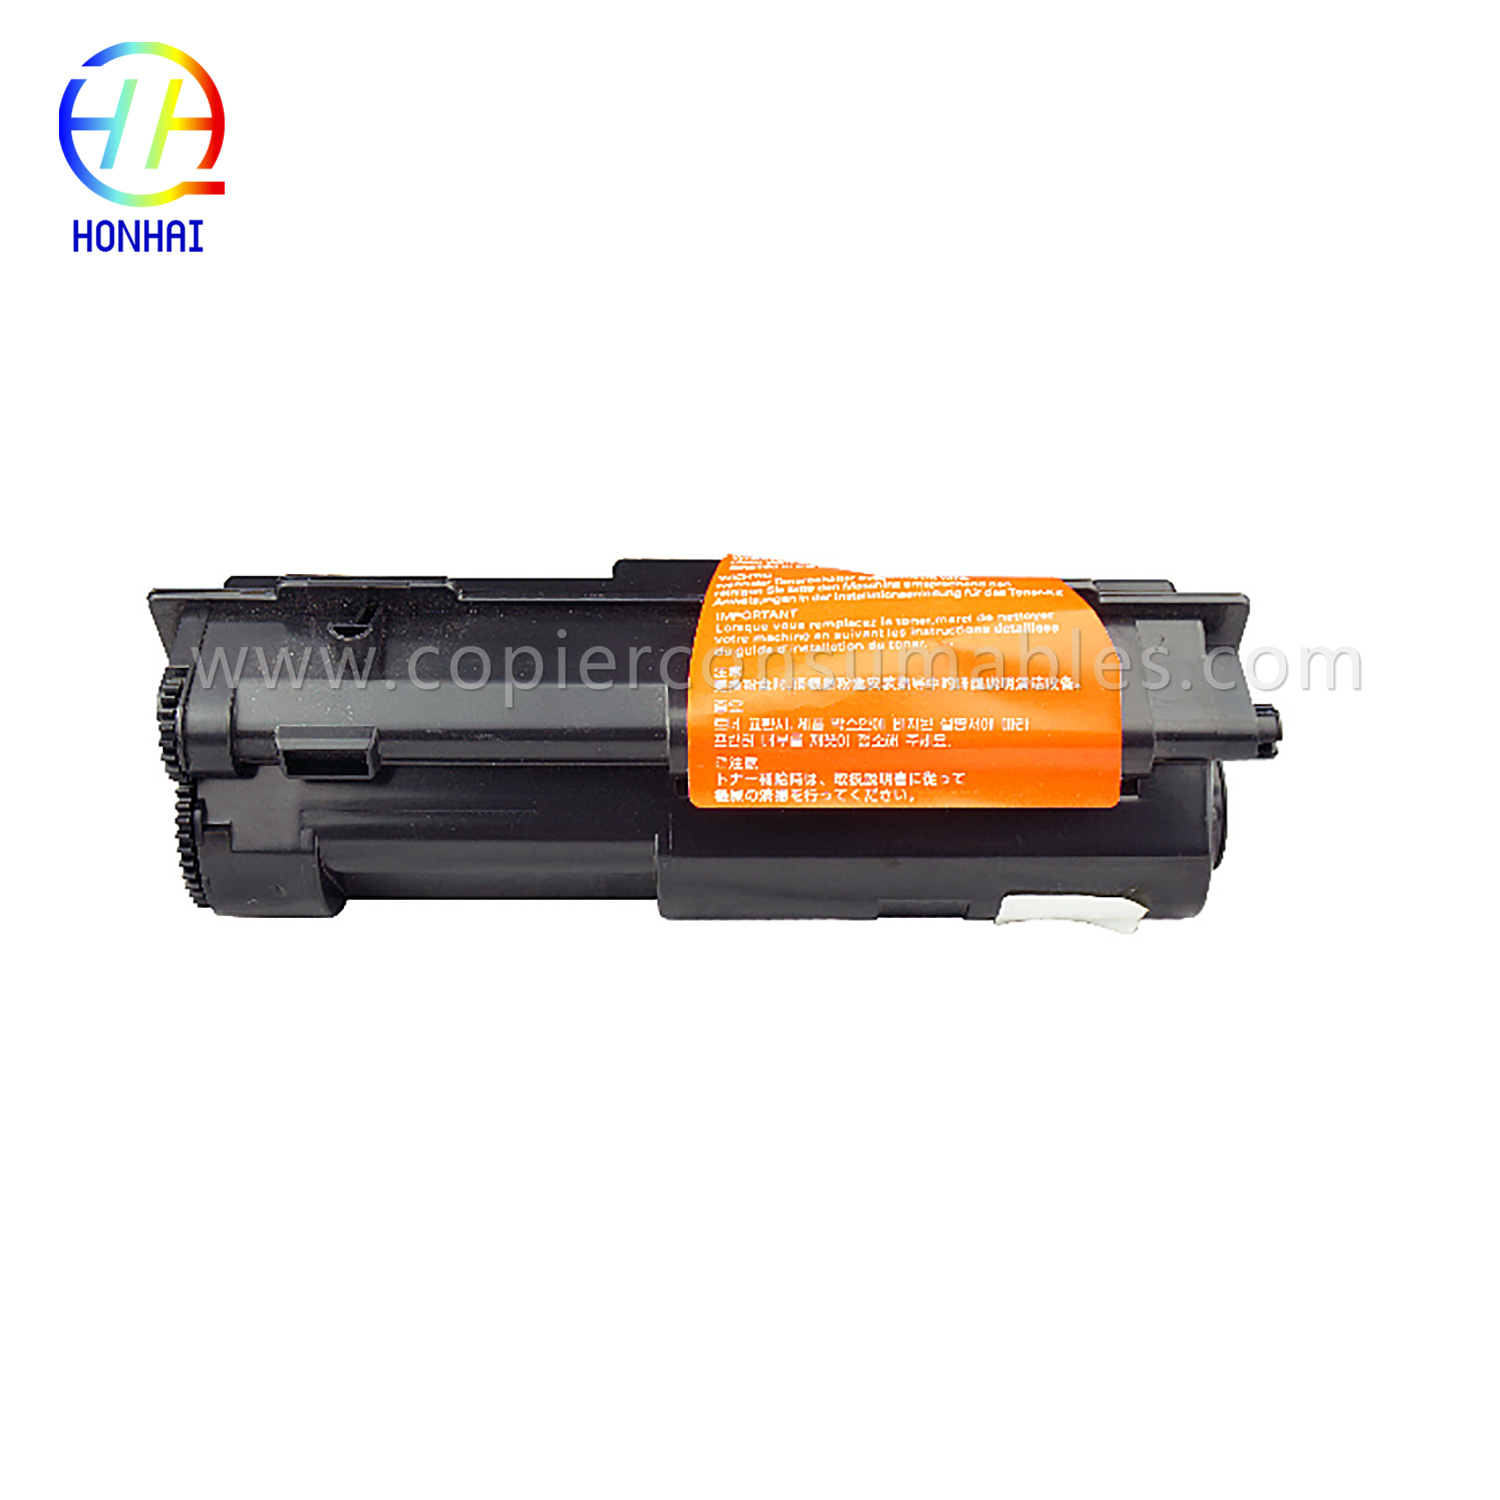 Color Toner Cartridge for Brother HL-4040 4050 4070 DCP-9040CN 9045CN